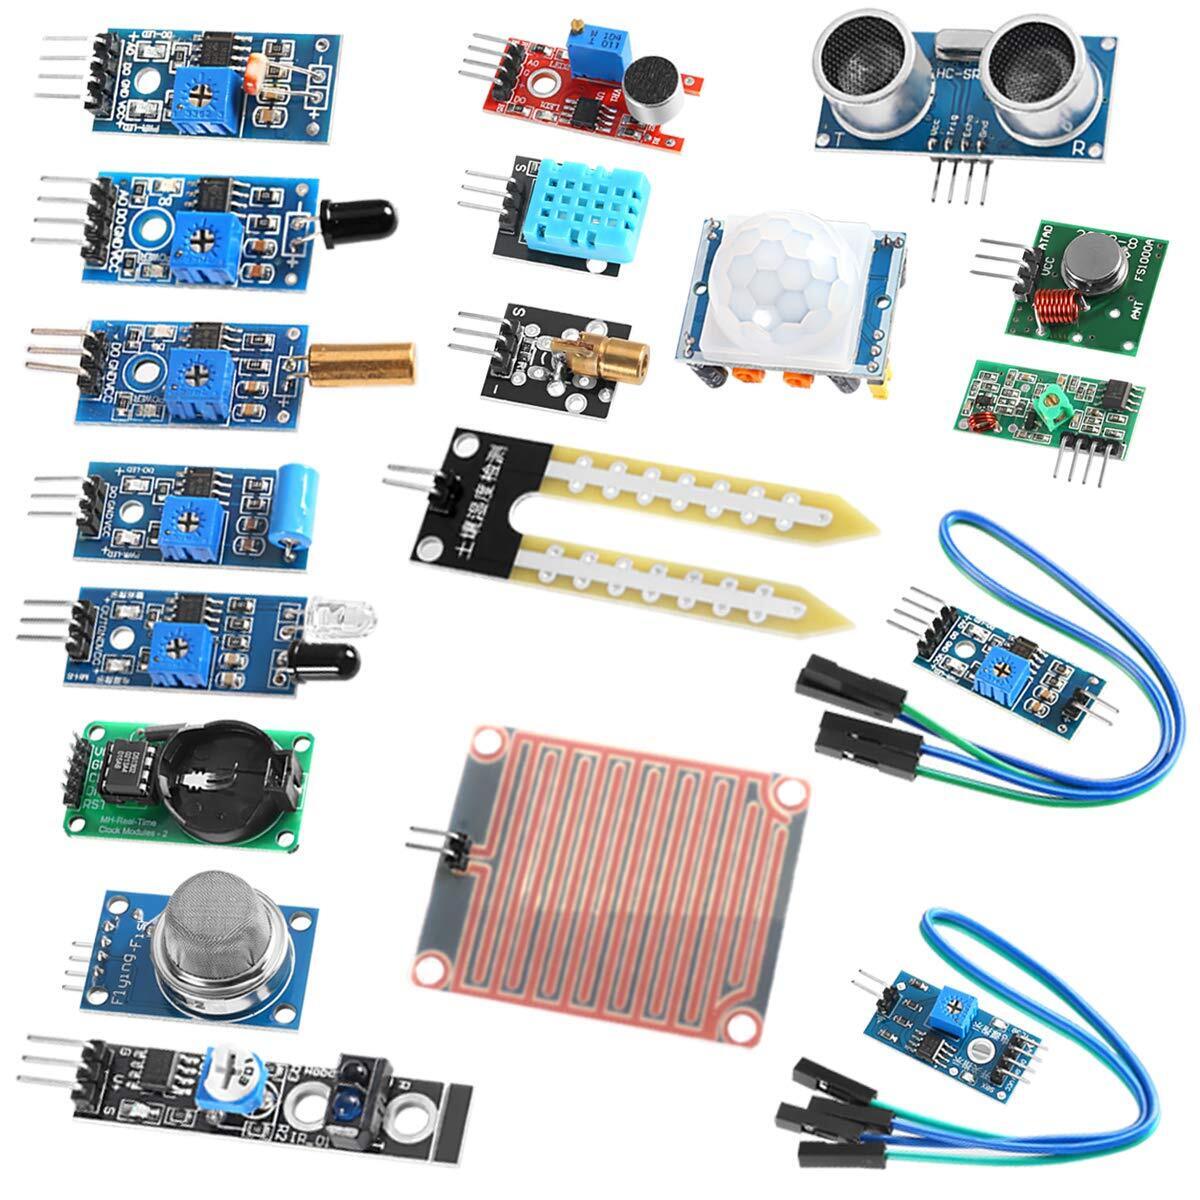 16 in 1 Project Super Starter Kits Sensor Modules Kit for Arduino Raspberry f...